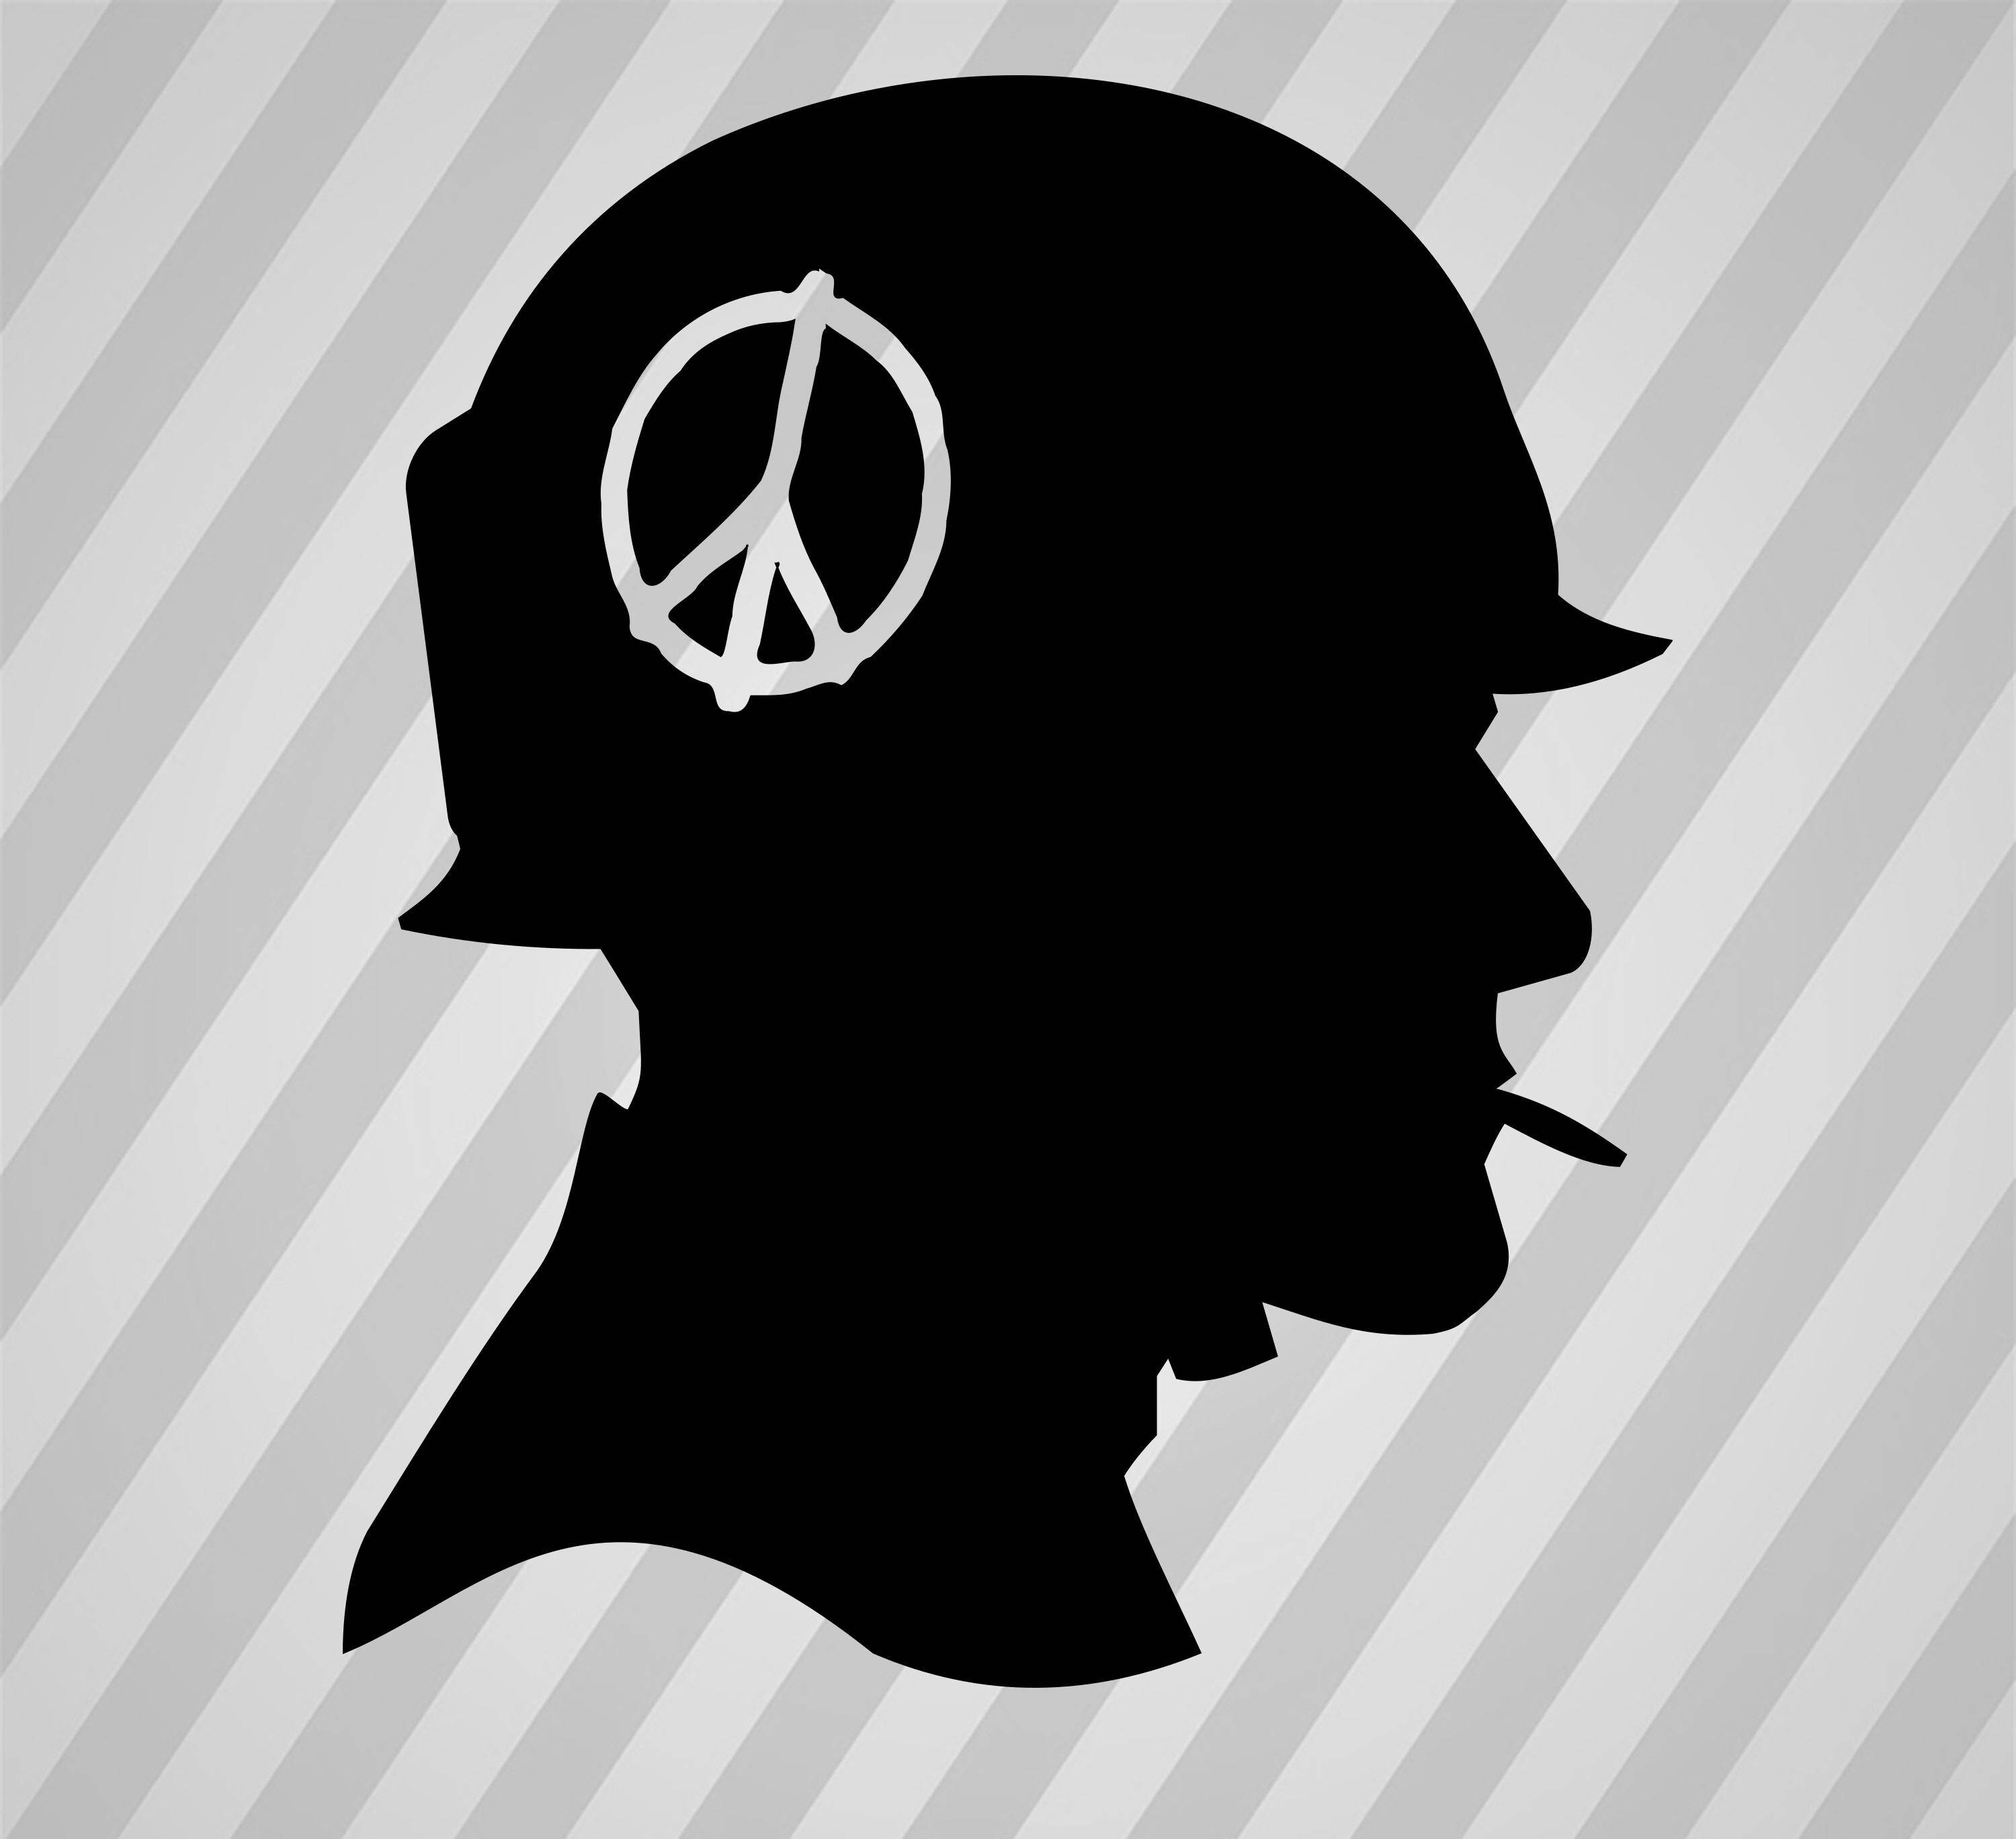 Download Vietnam Soldier Profile Silhouette DIngbat Dxf Svg Eps